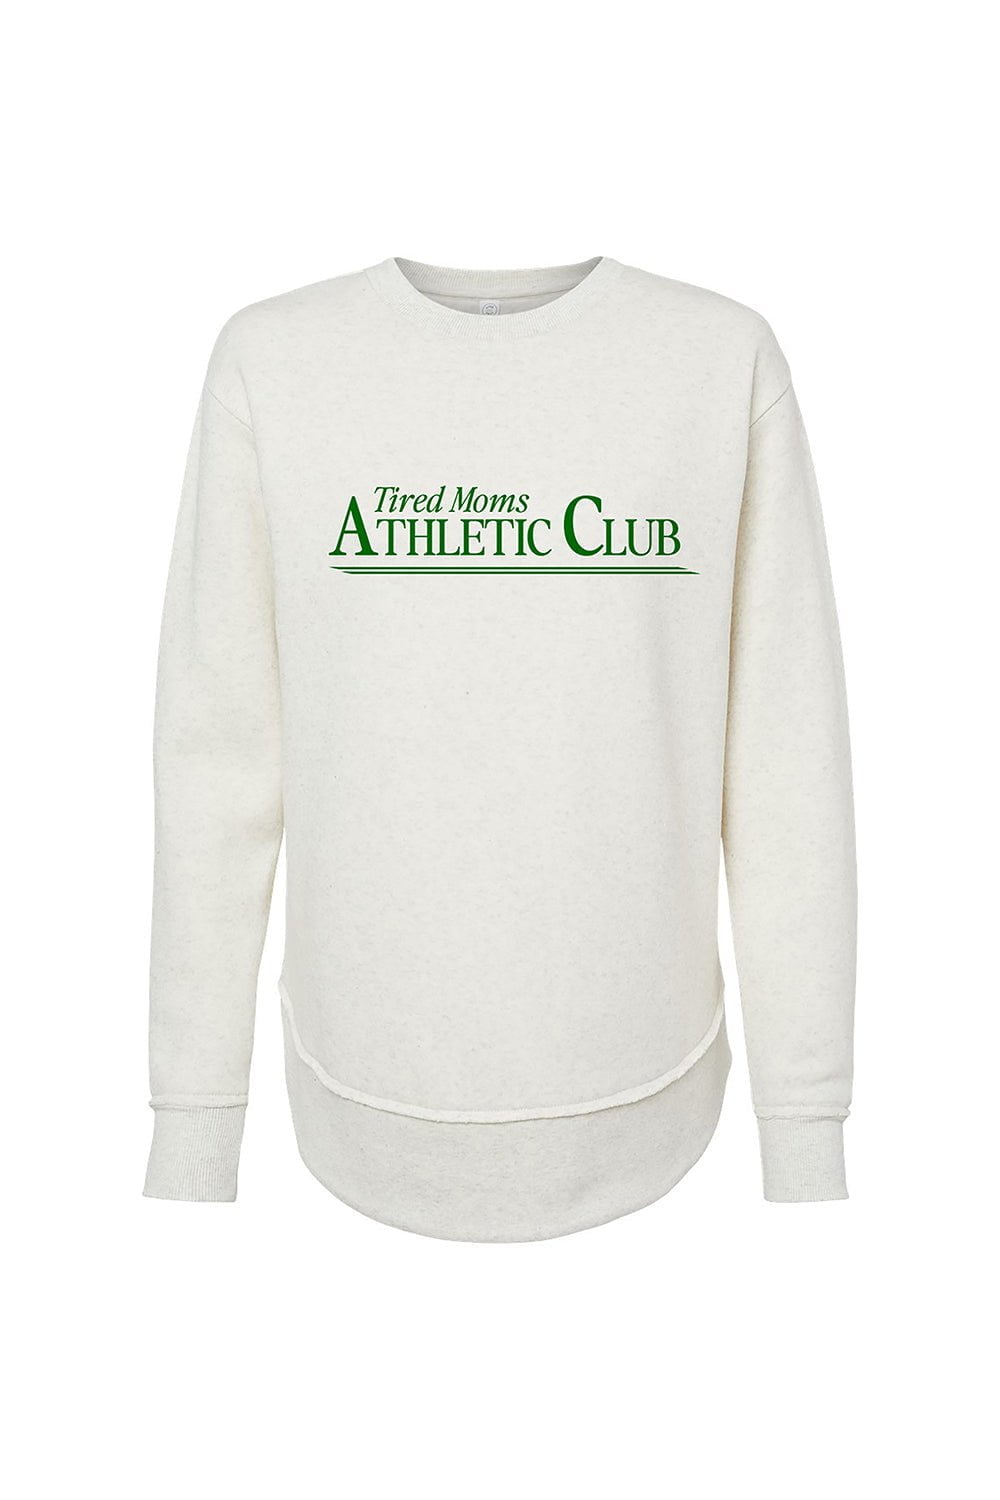 Sarah Marie Design Studio Sweatshirt Small / Oatmeal Tired Moms Athletic Club Sweatshirt